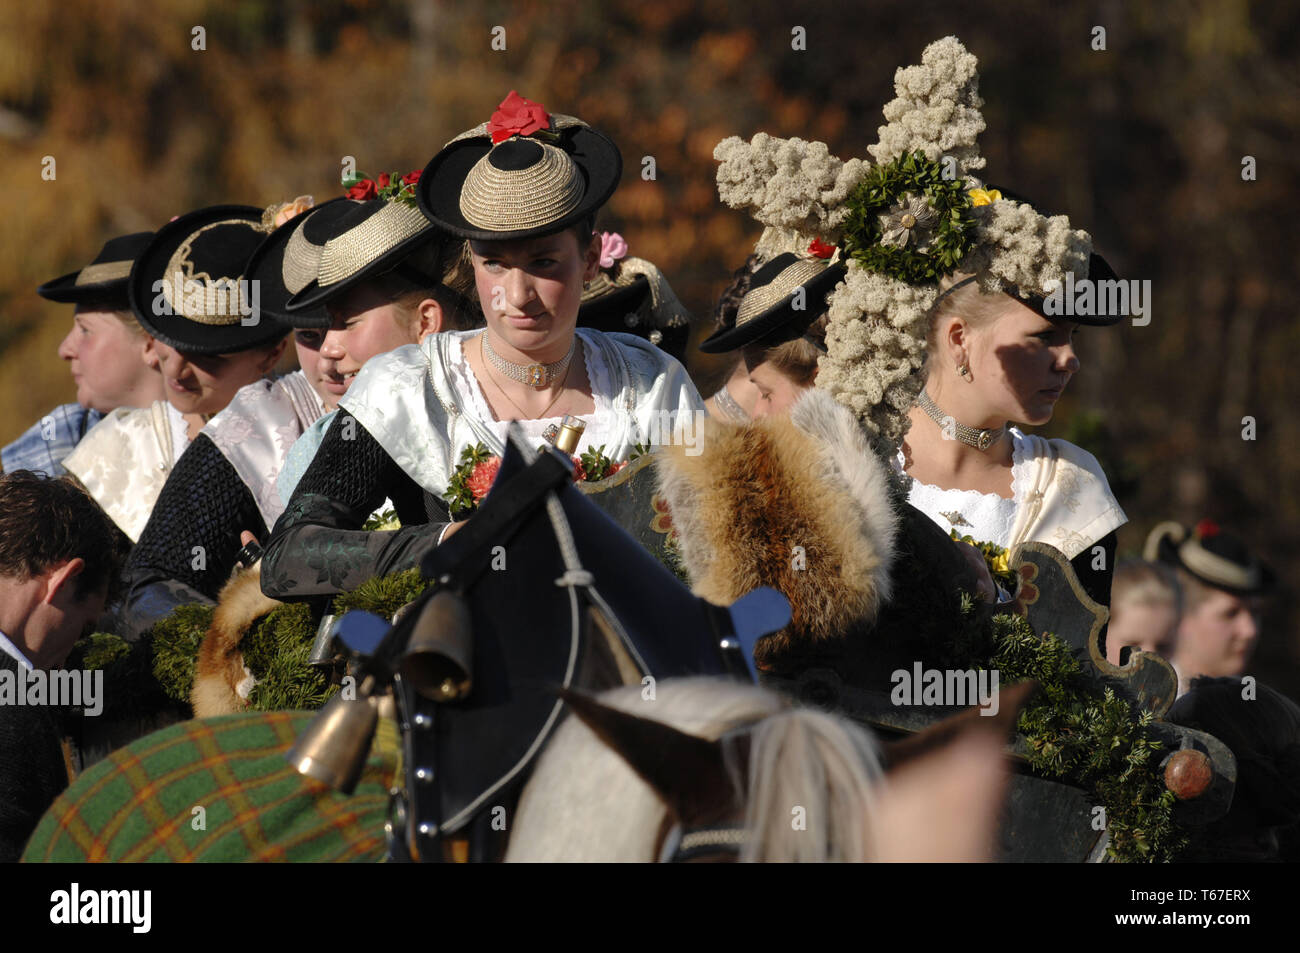 Leonhardifahrt or Leonhardiritt, a Procession with garbs, a Bavarian Tradition, South Germany Stock Photo